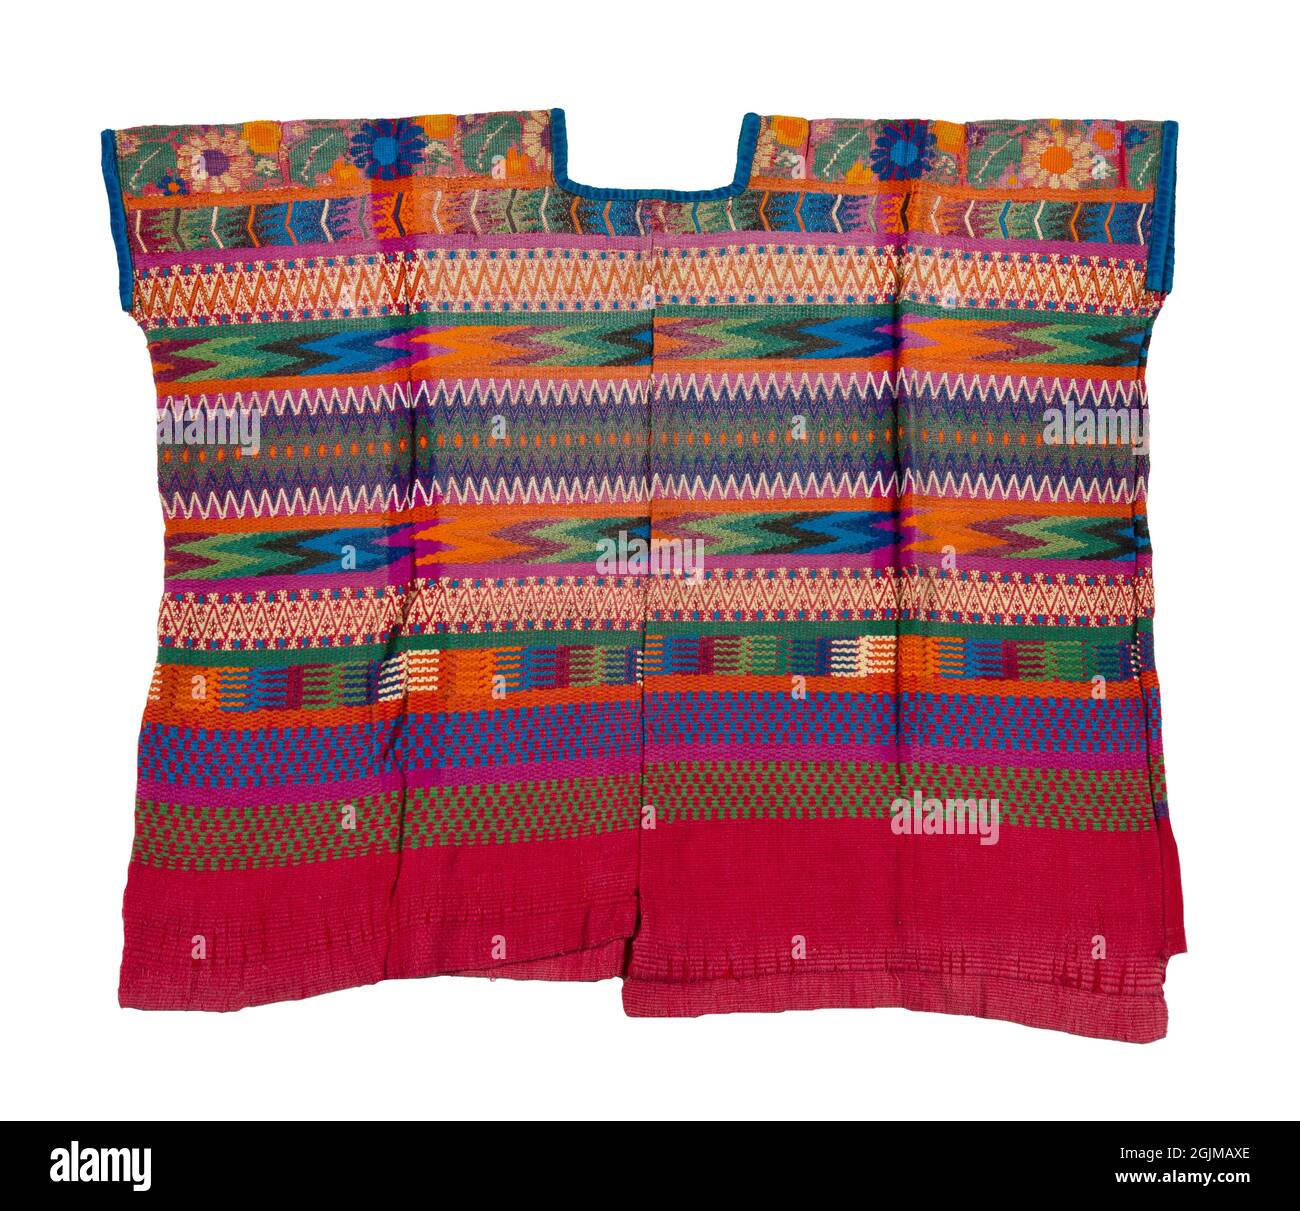 A huipil from San Antonio Aguas Calientes. A huipil is a handwoven blouse-like garment worn by women . Contemporary Guatemalan Maya costume. Guatemala Stock Photo